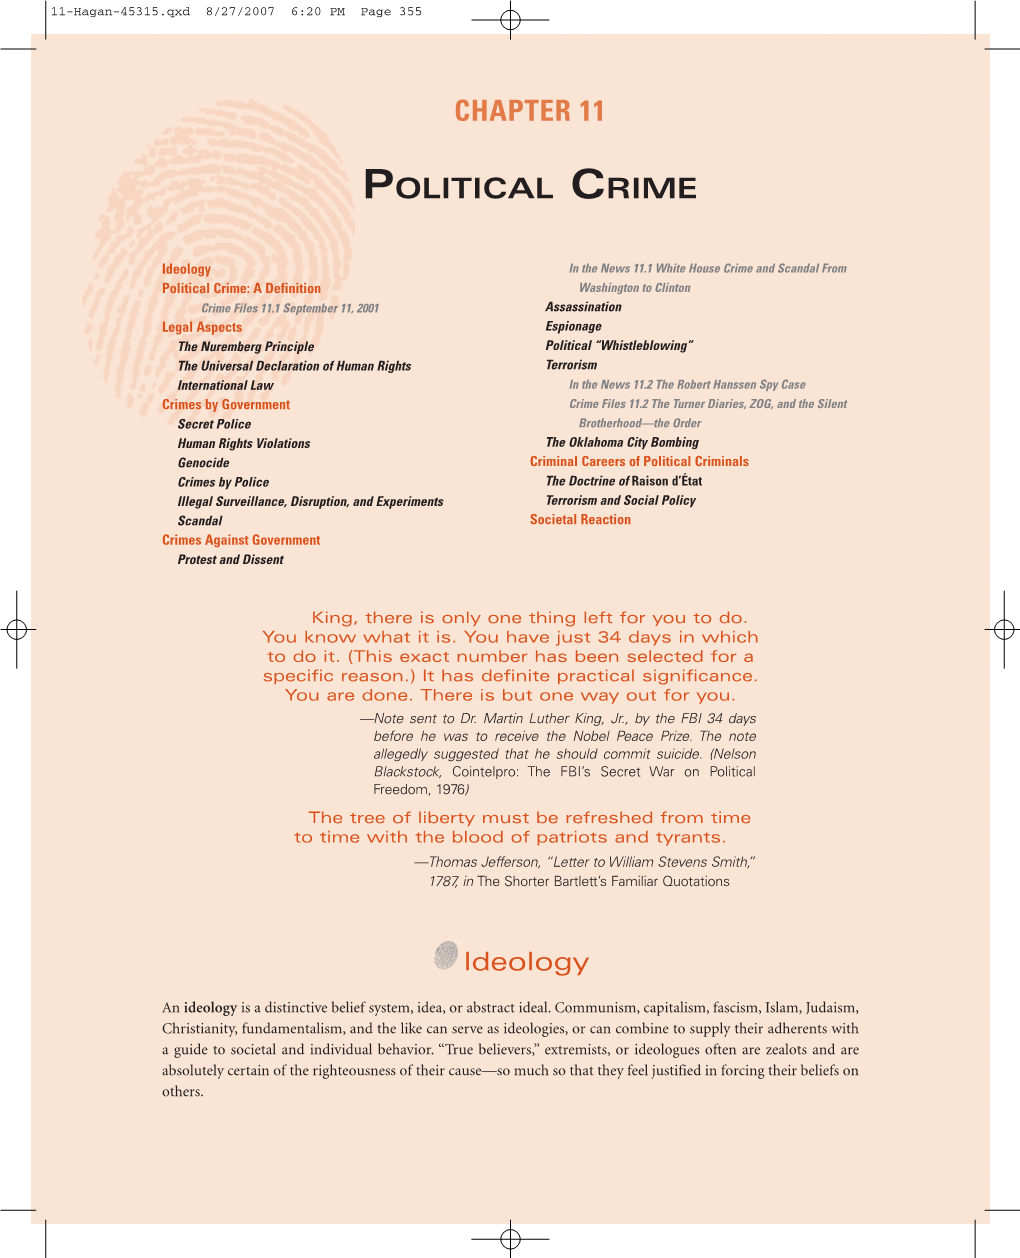 Chapter 11 Political Crime